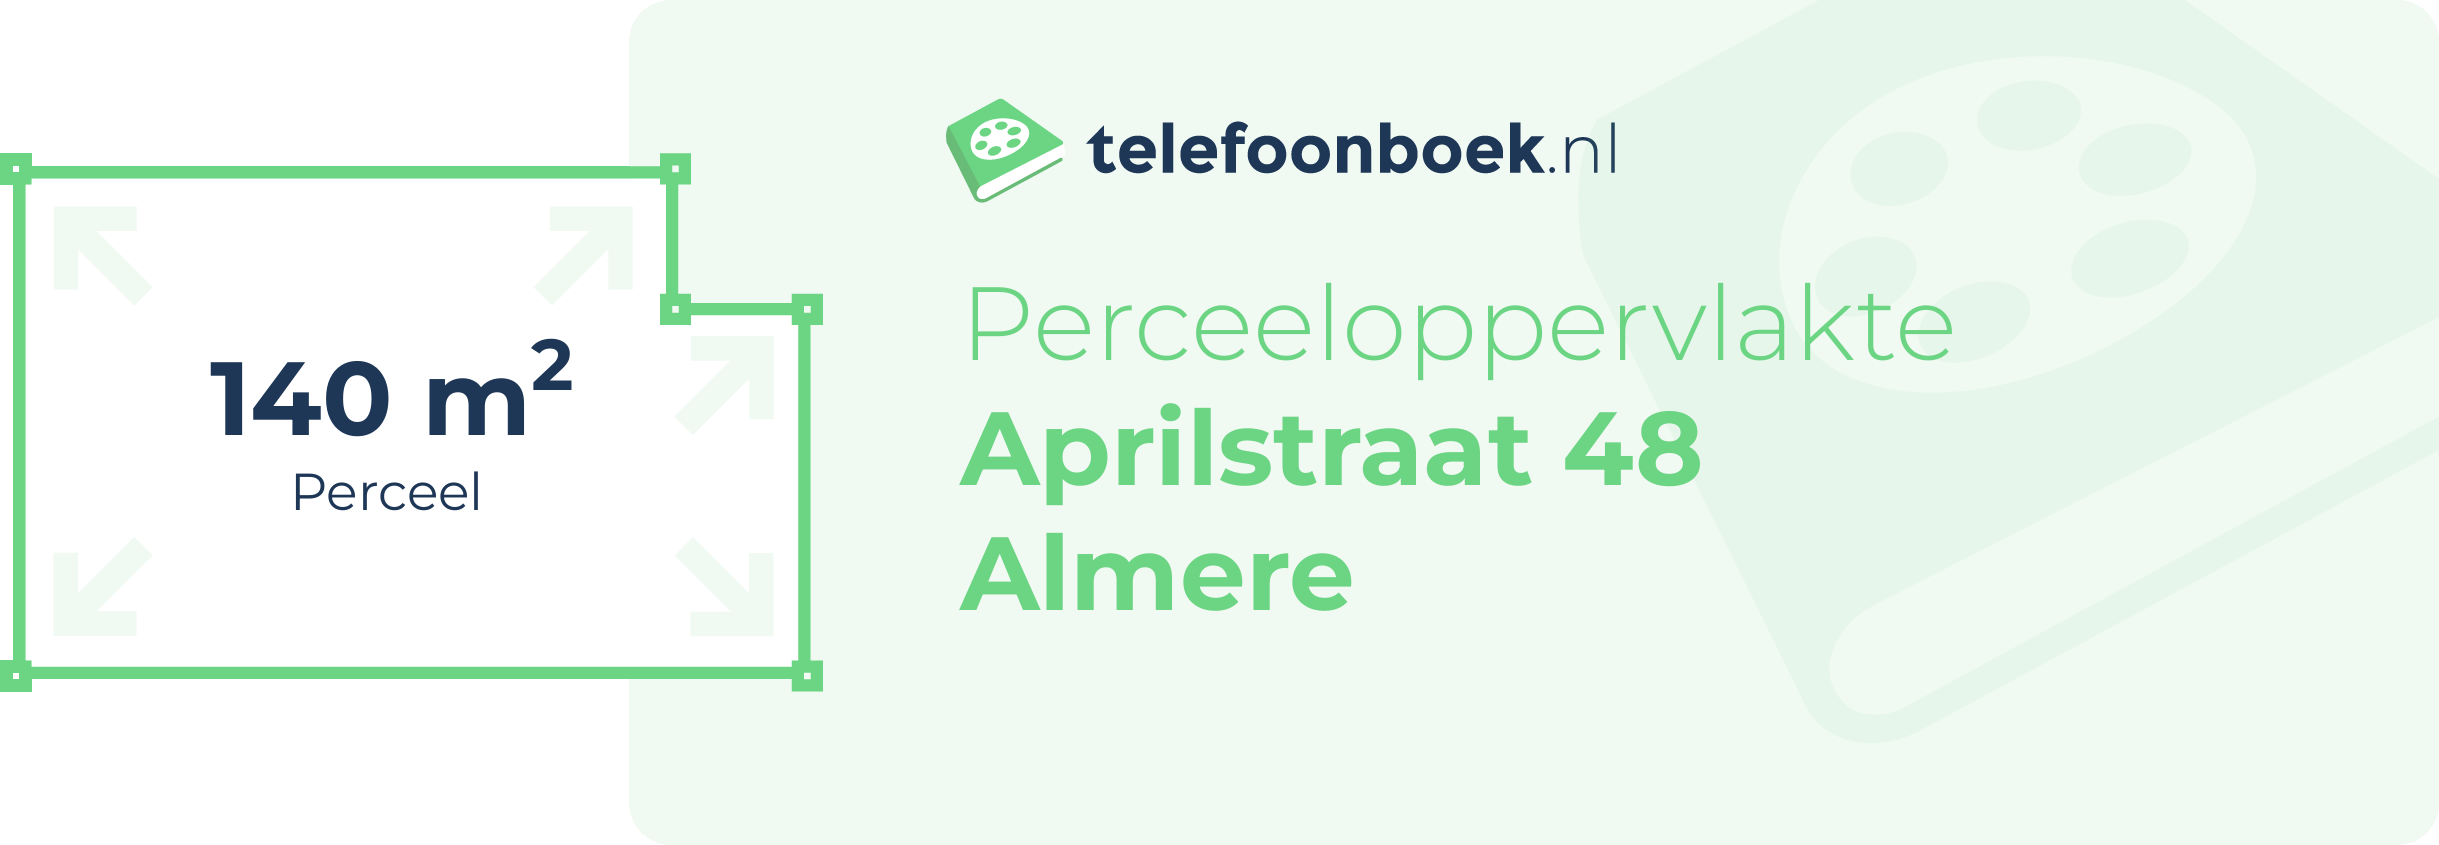 Perceeloppervlakte Aprilstraat 48 Almere